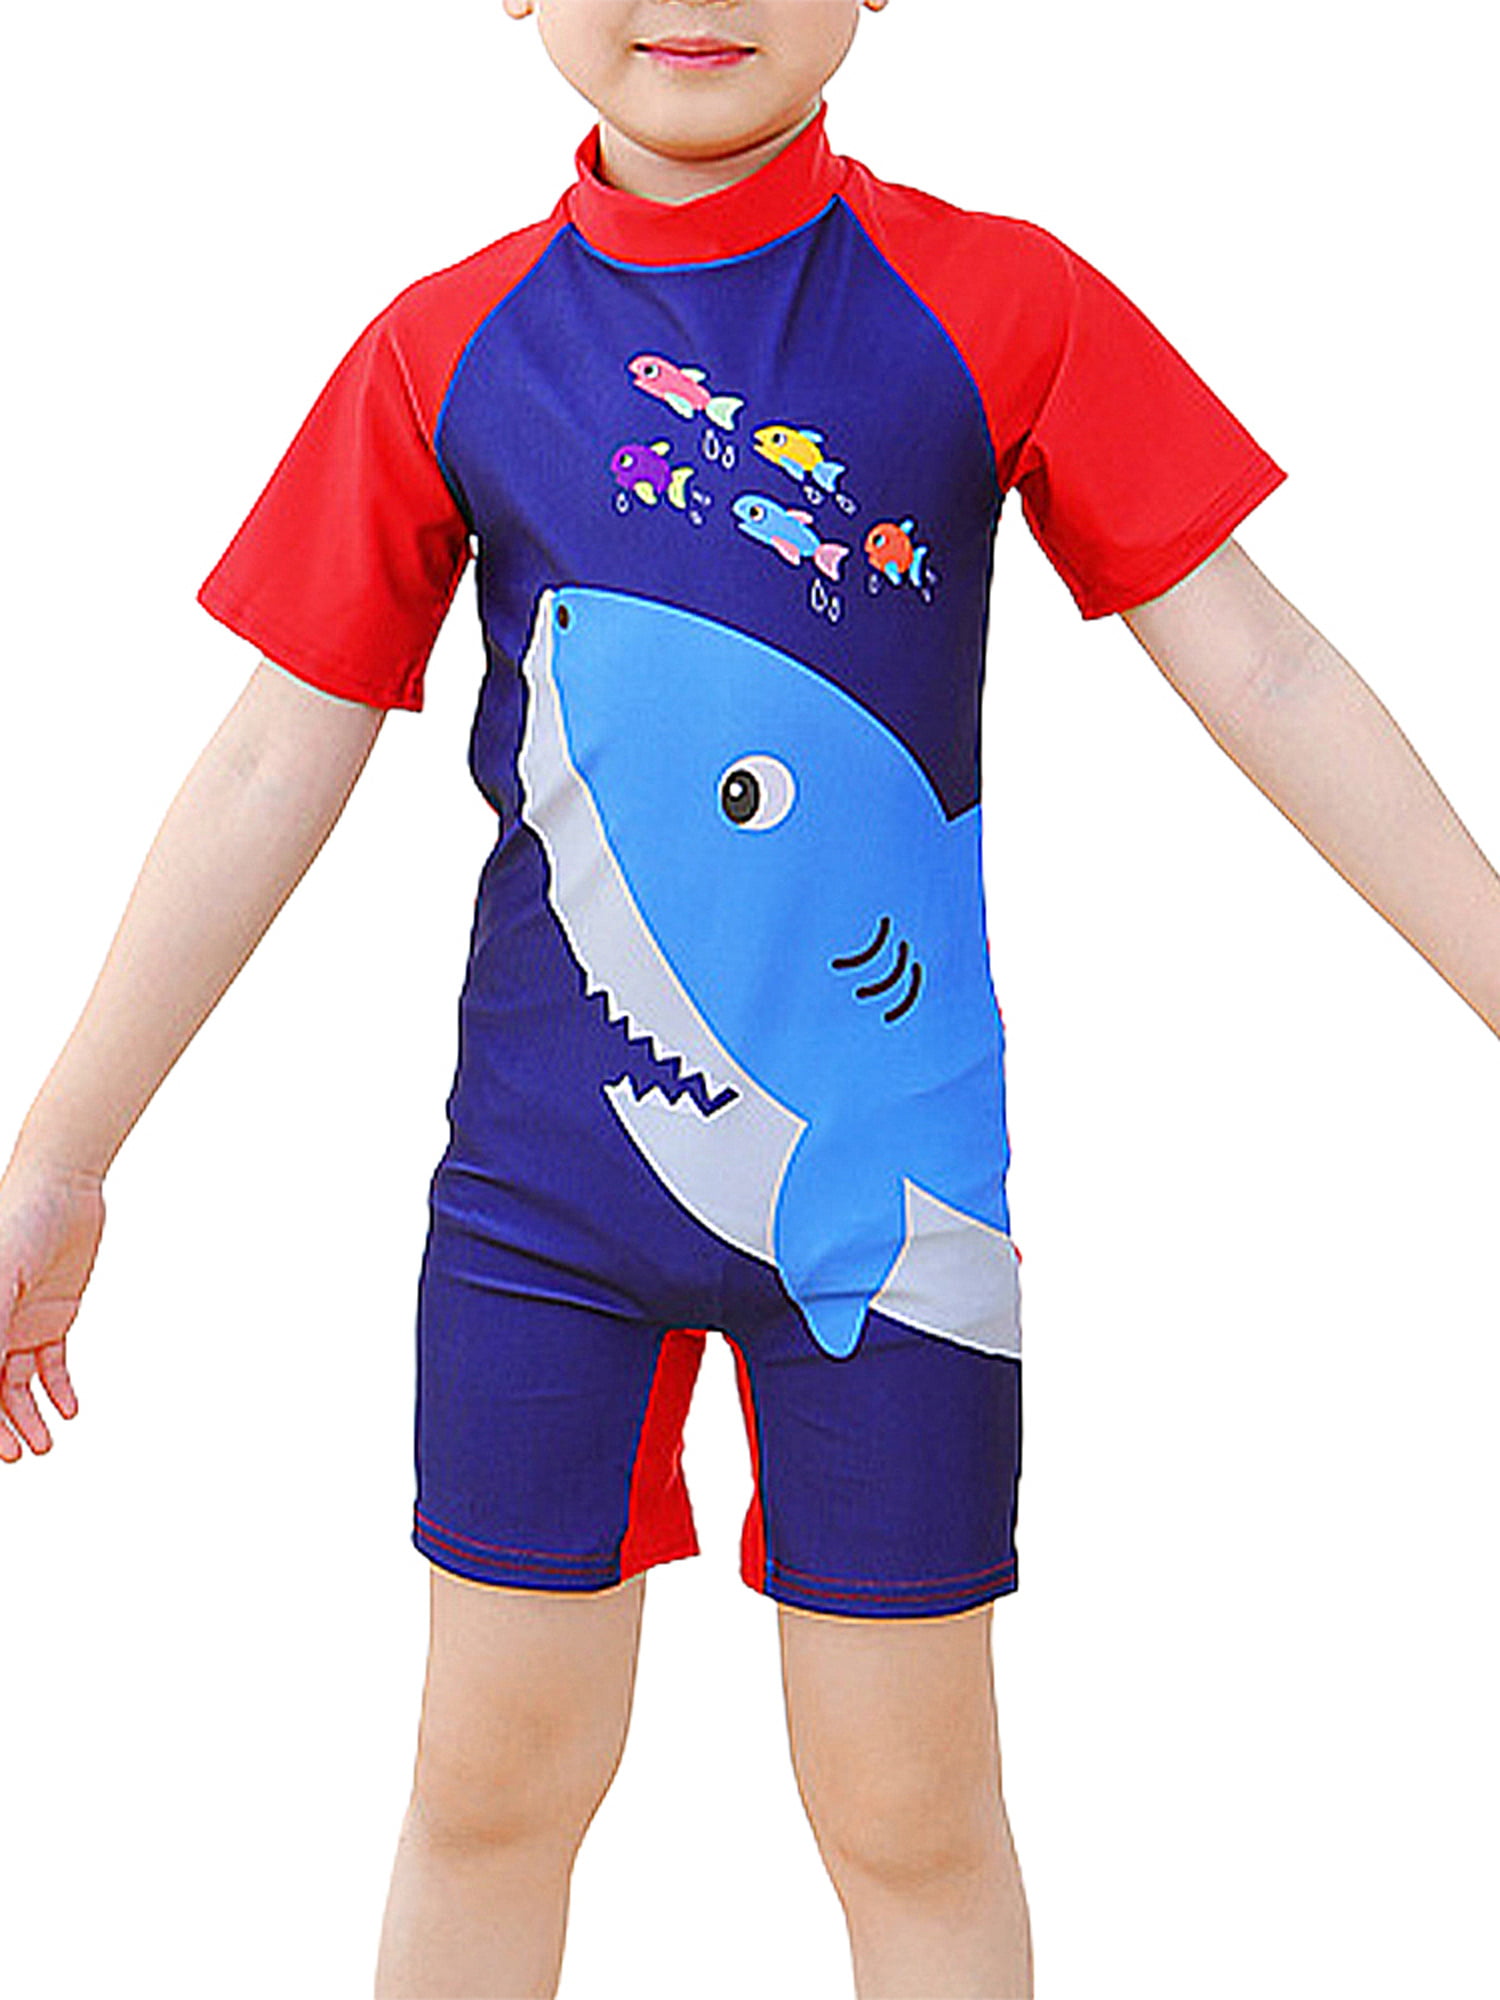 ICECTR Toddler Baby Boys Kid Swimsuit Cartoon Dinosaur Zipper Bathing Suit Caps 2Pcs Summer Beachwear 